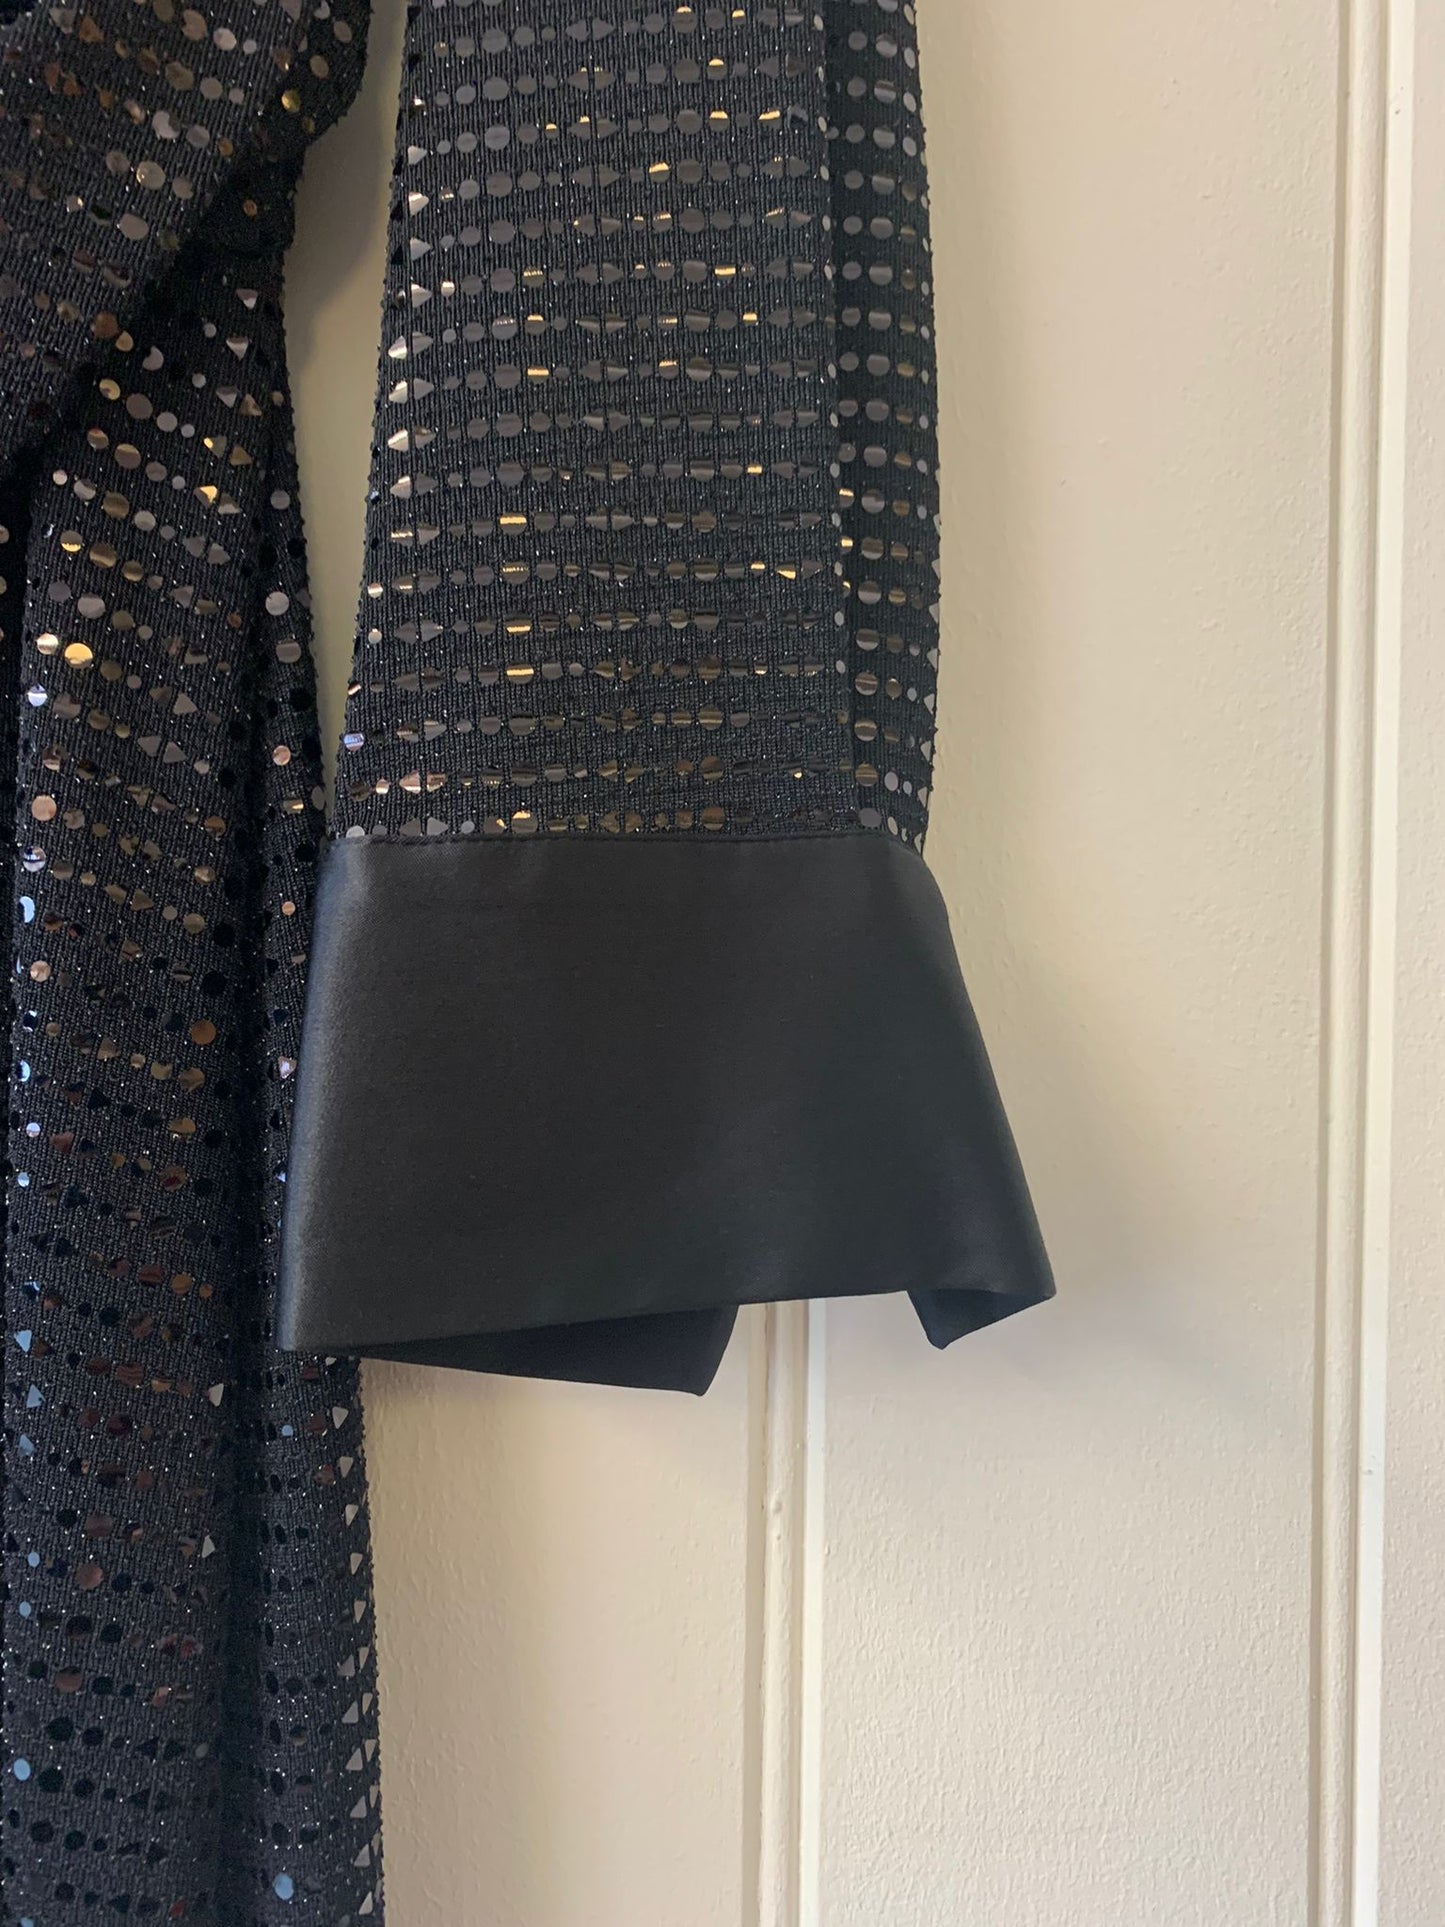 ZARA black sequin shirt style midi dress S